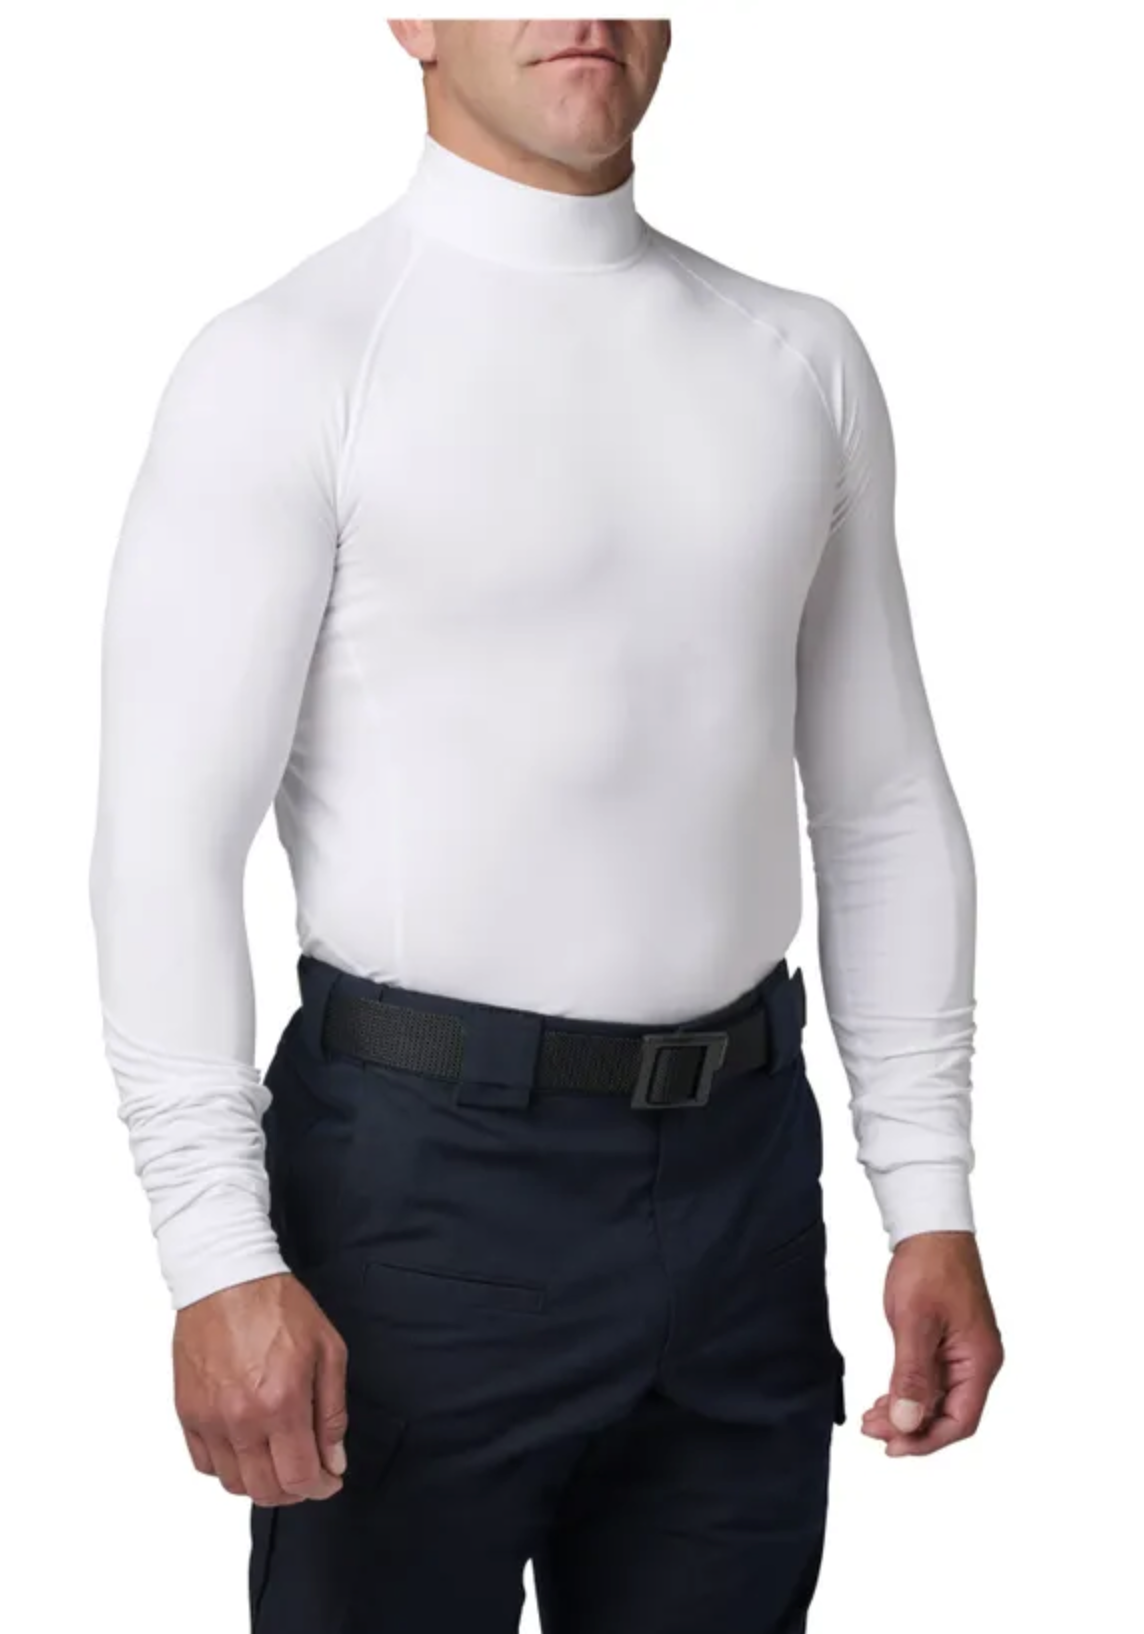 5.11 - Mock Neck Long Sleeve top - Uniform White (992)